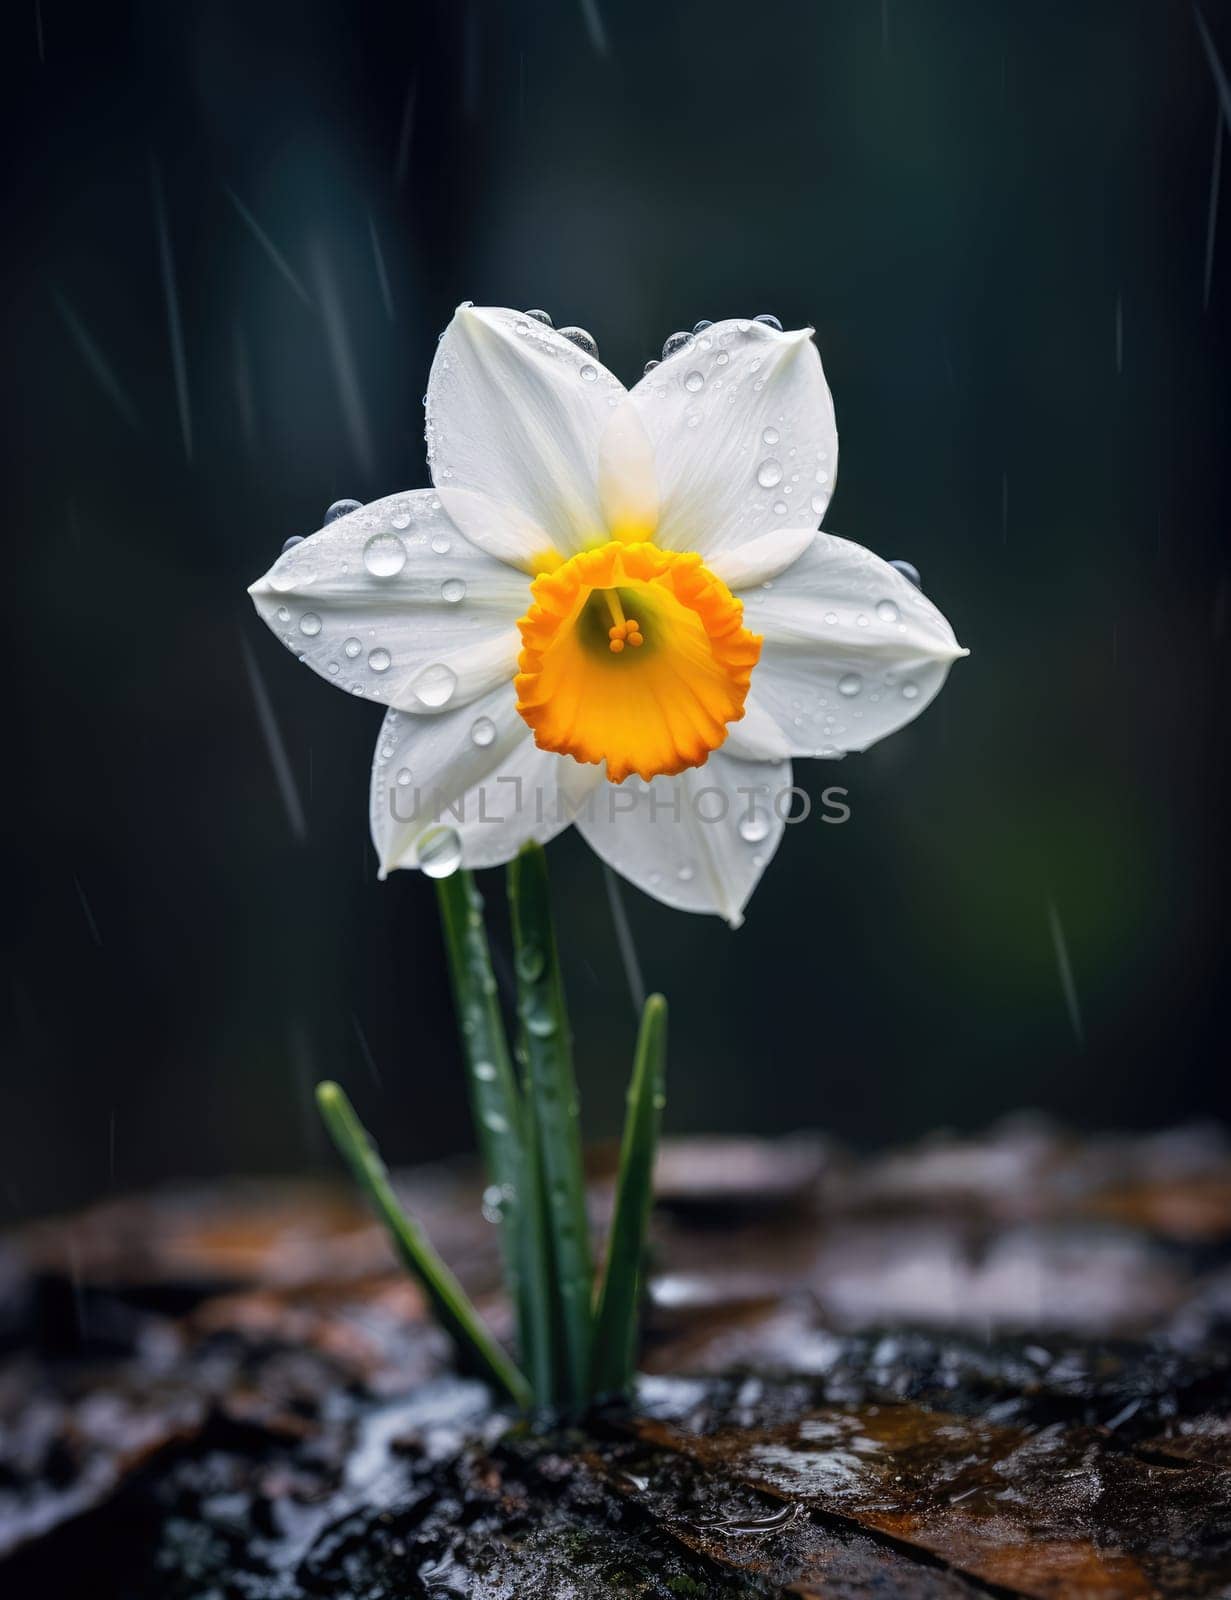 White daffodils in the rain drops by palinchak